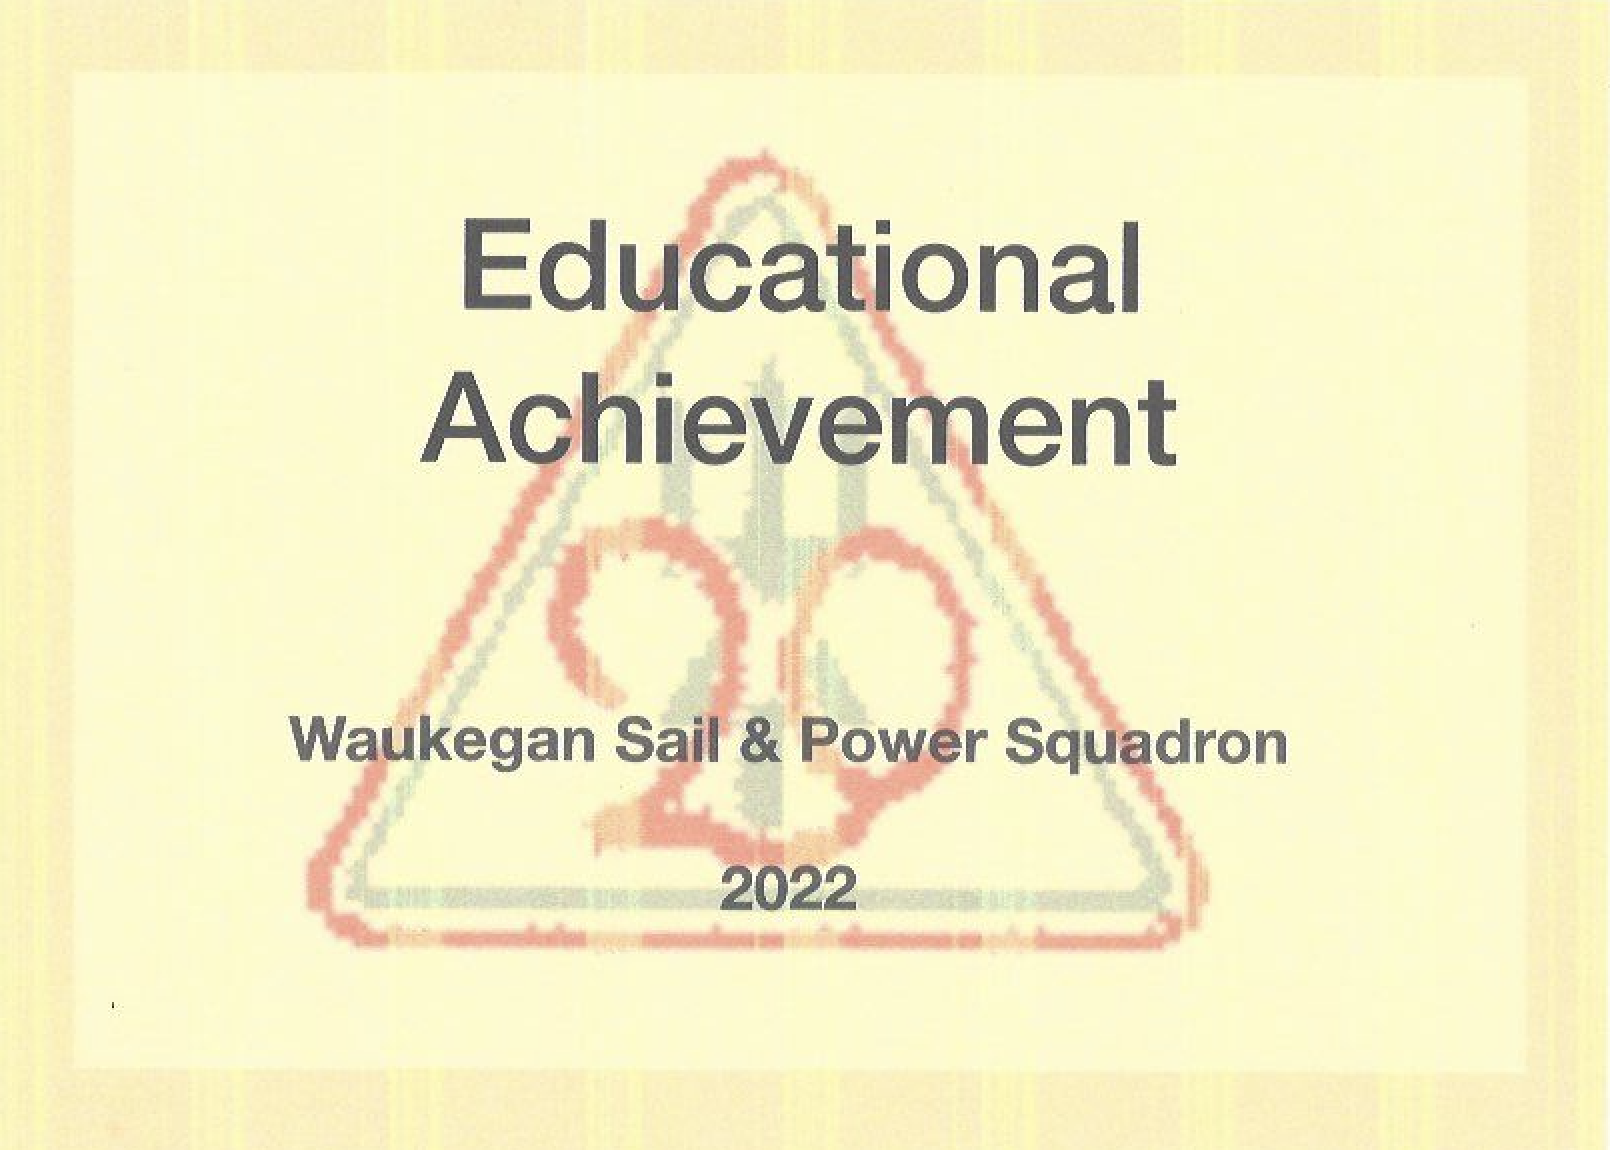 Educational Achievement Award 2022